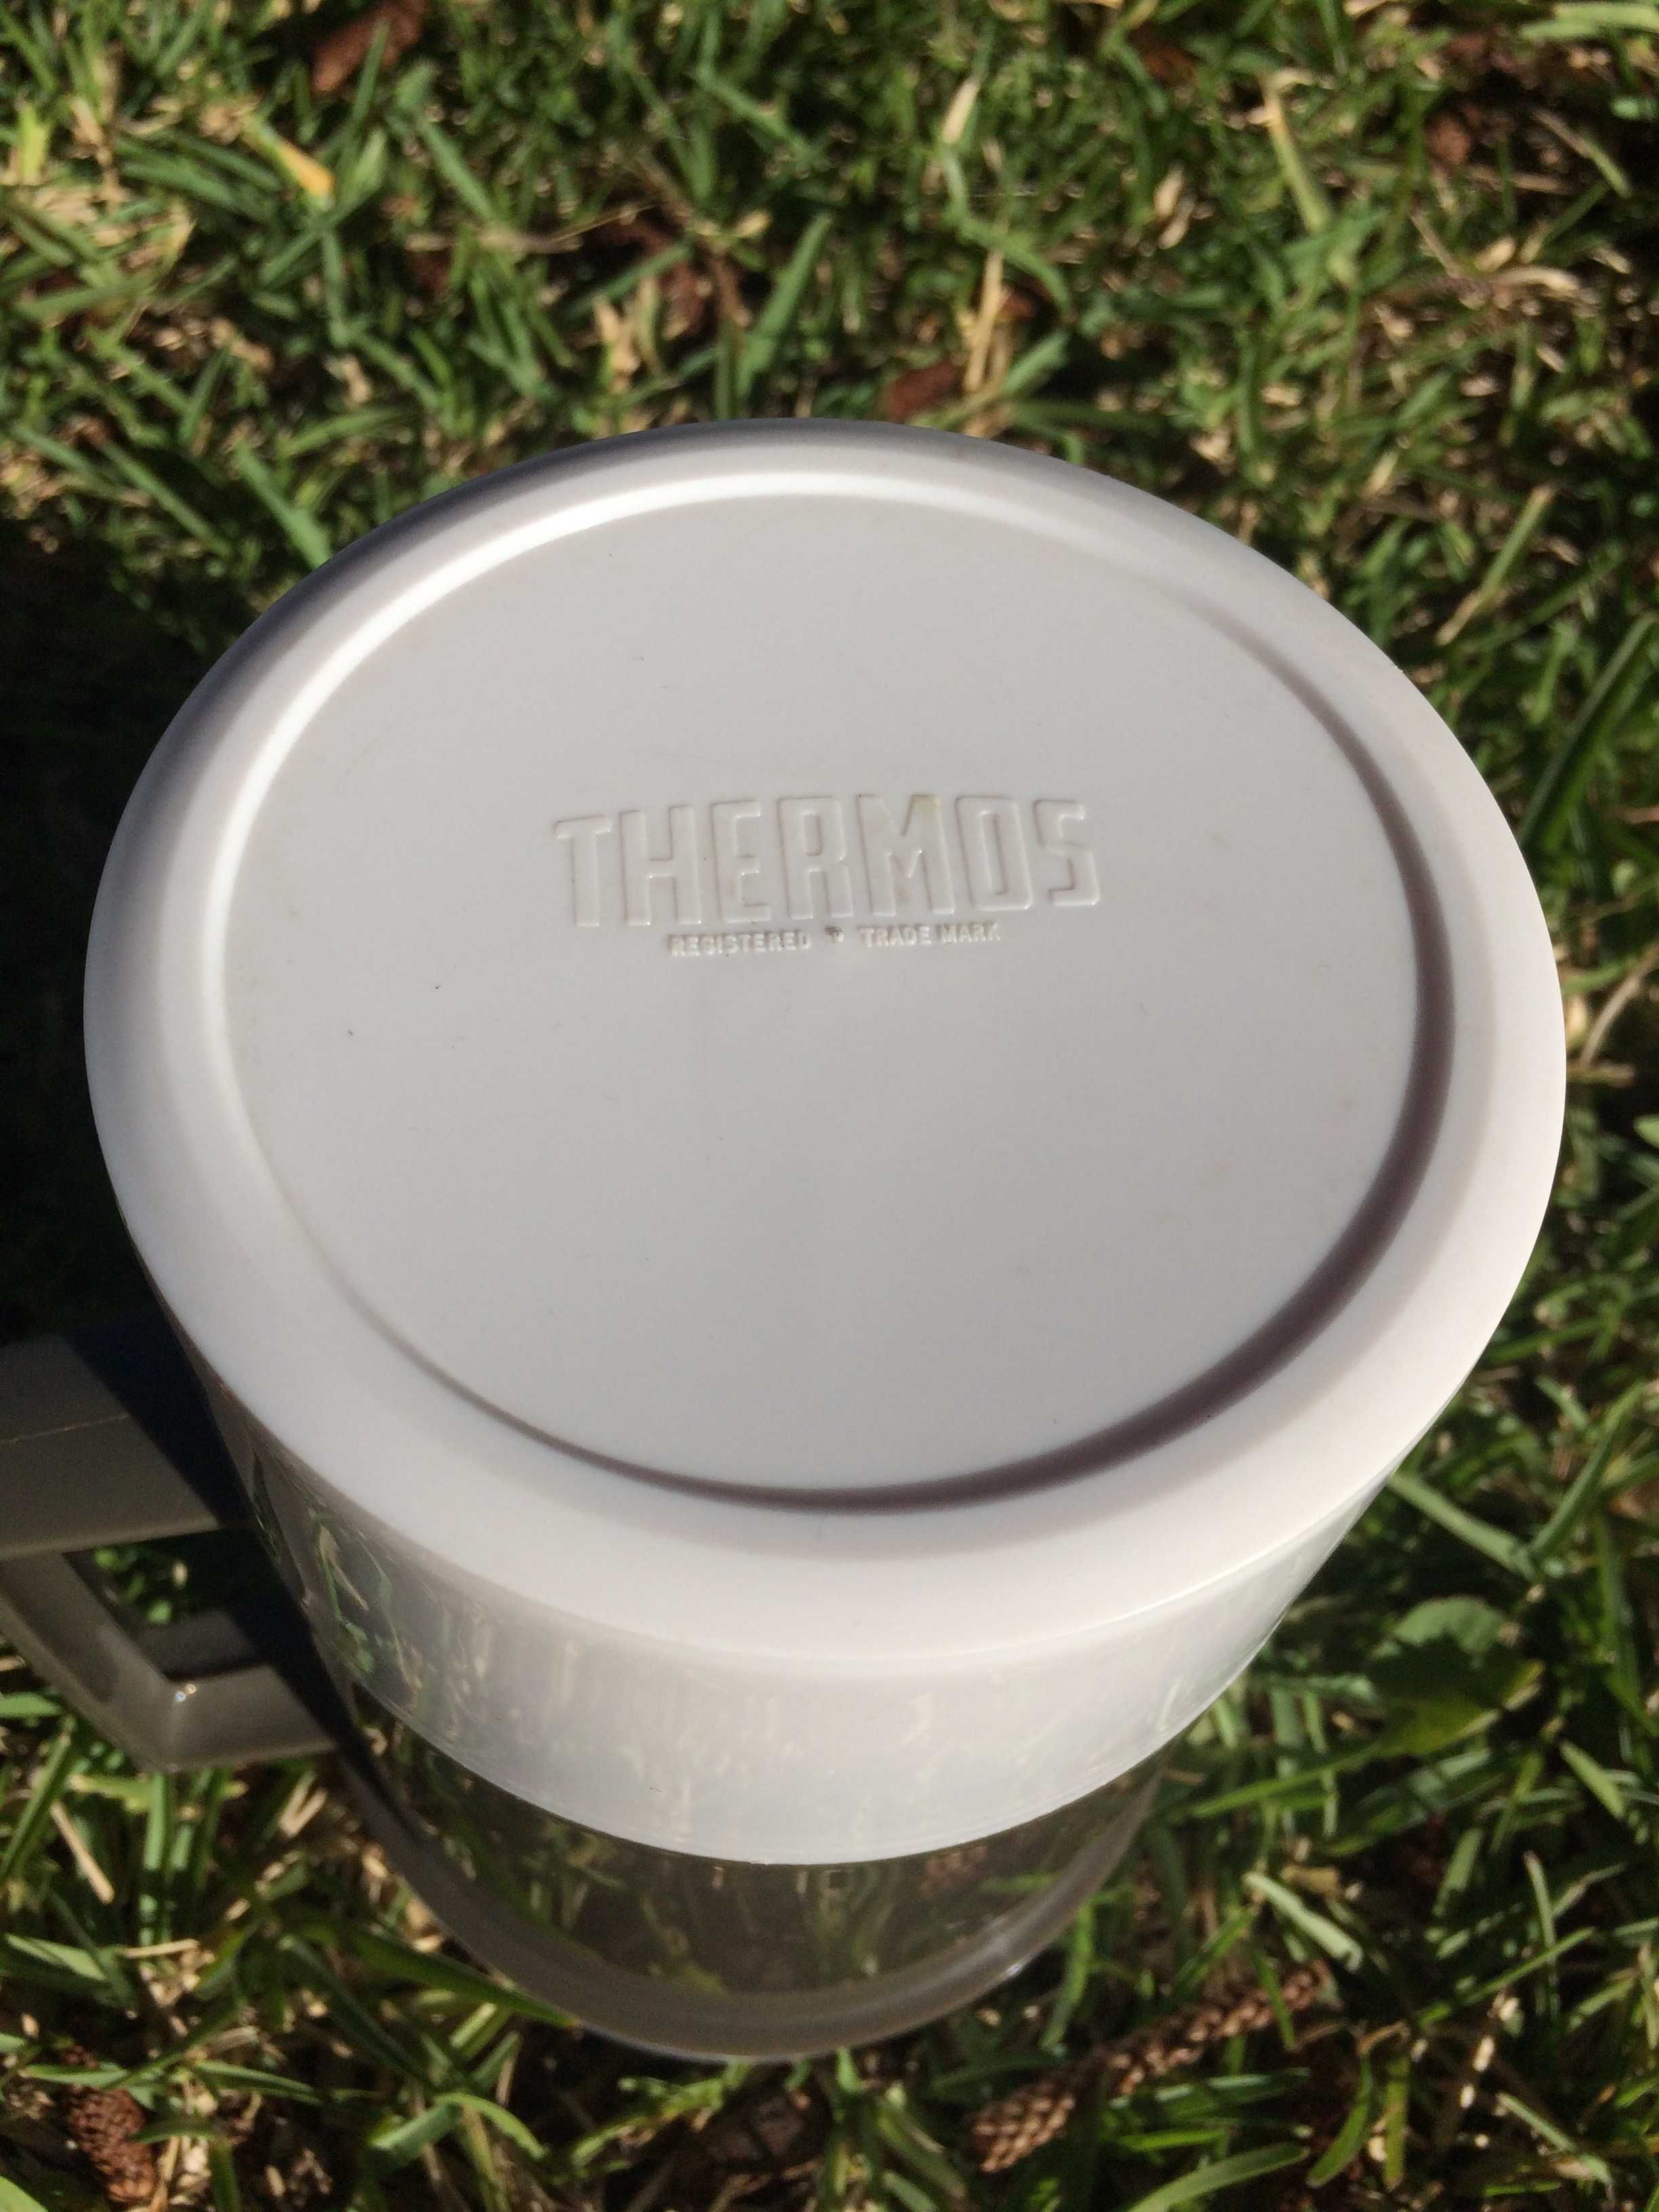 Recipiente térmico para sopas ou bebidas - marca Thermos